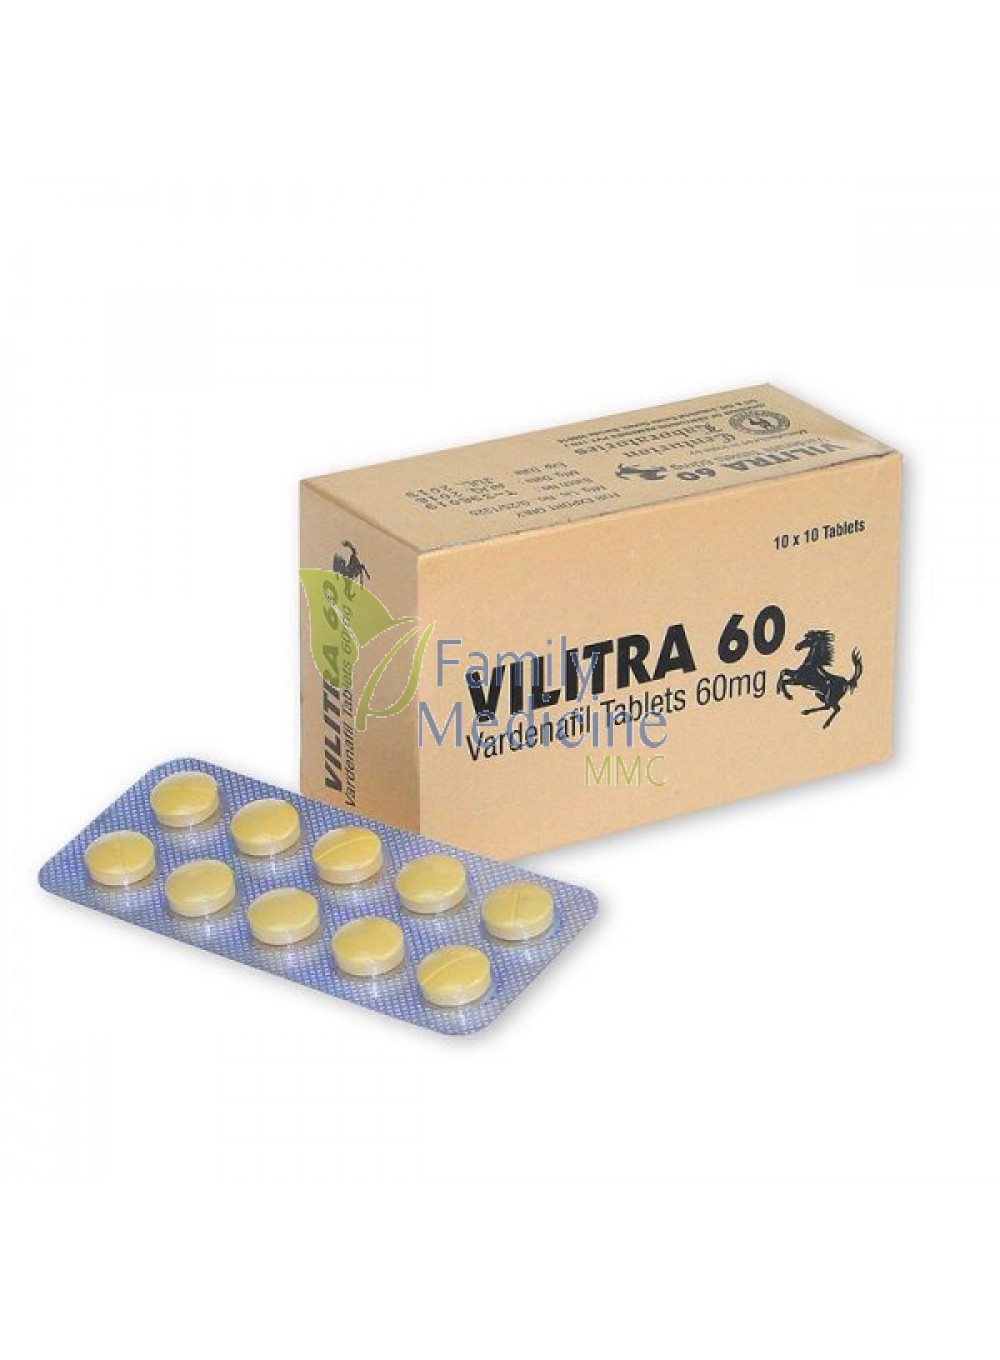 original viagra tablets price in india